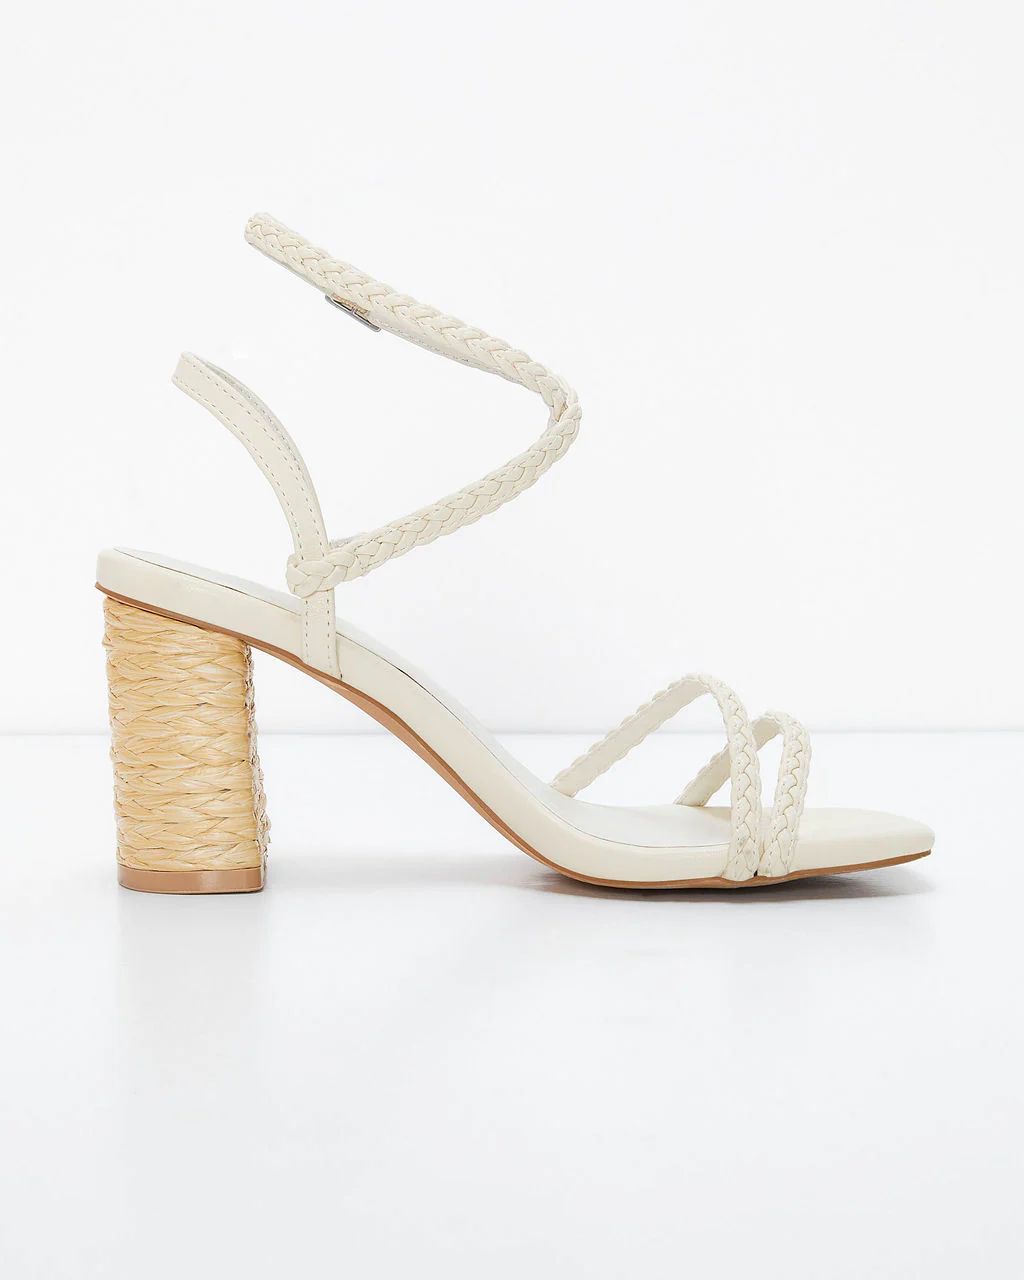 Zoella Braided Straw Block Heels | VICI Collection